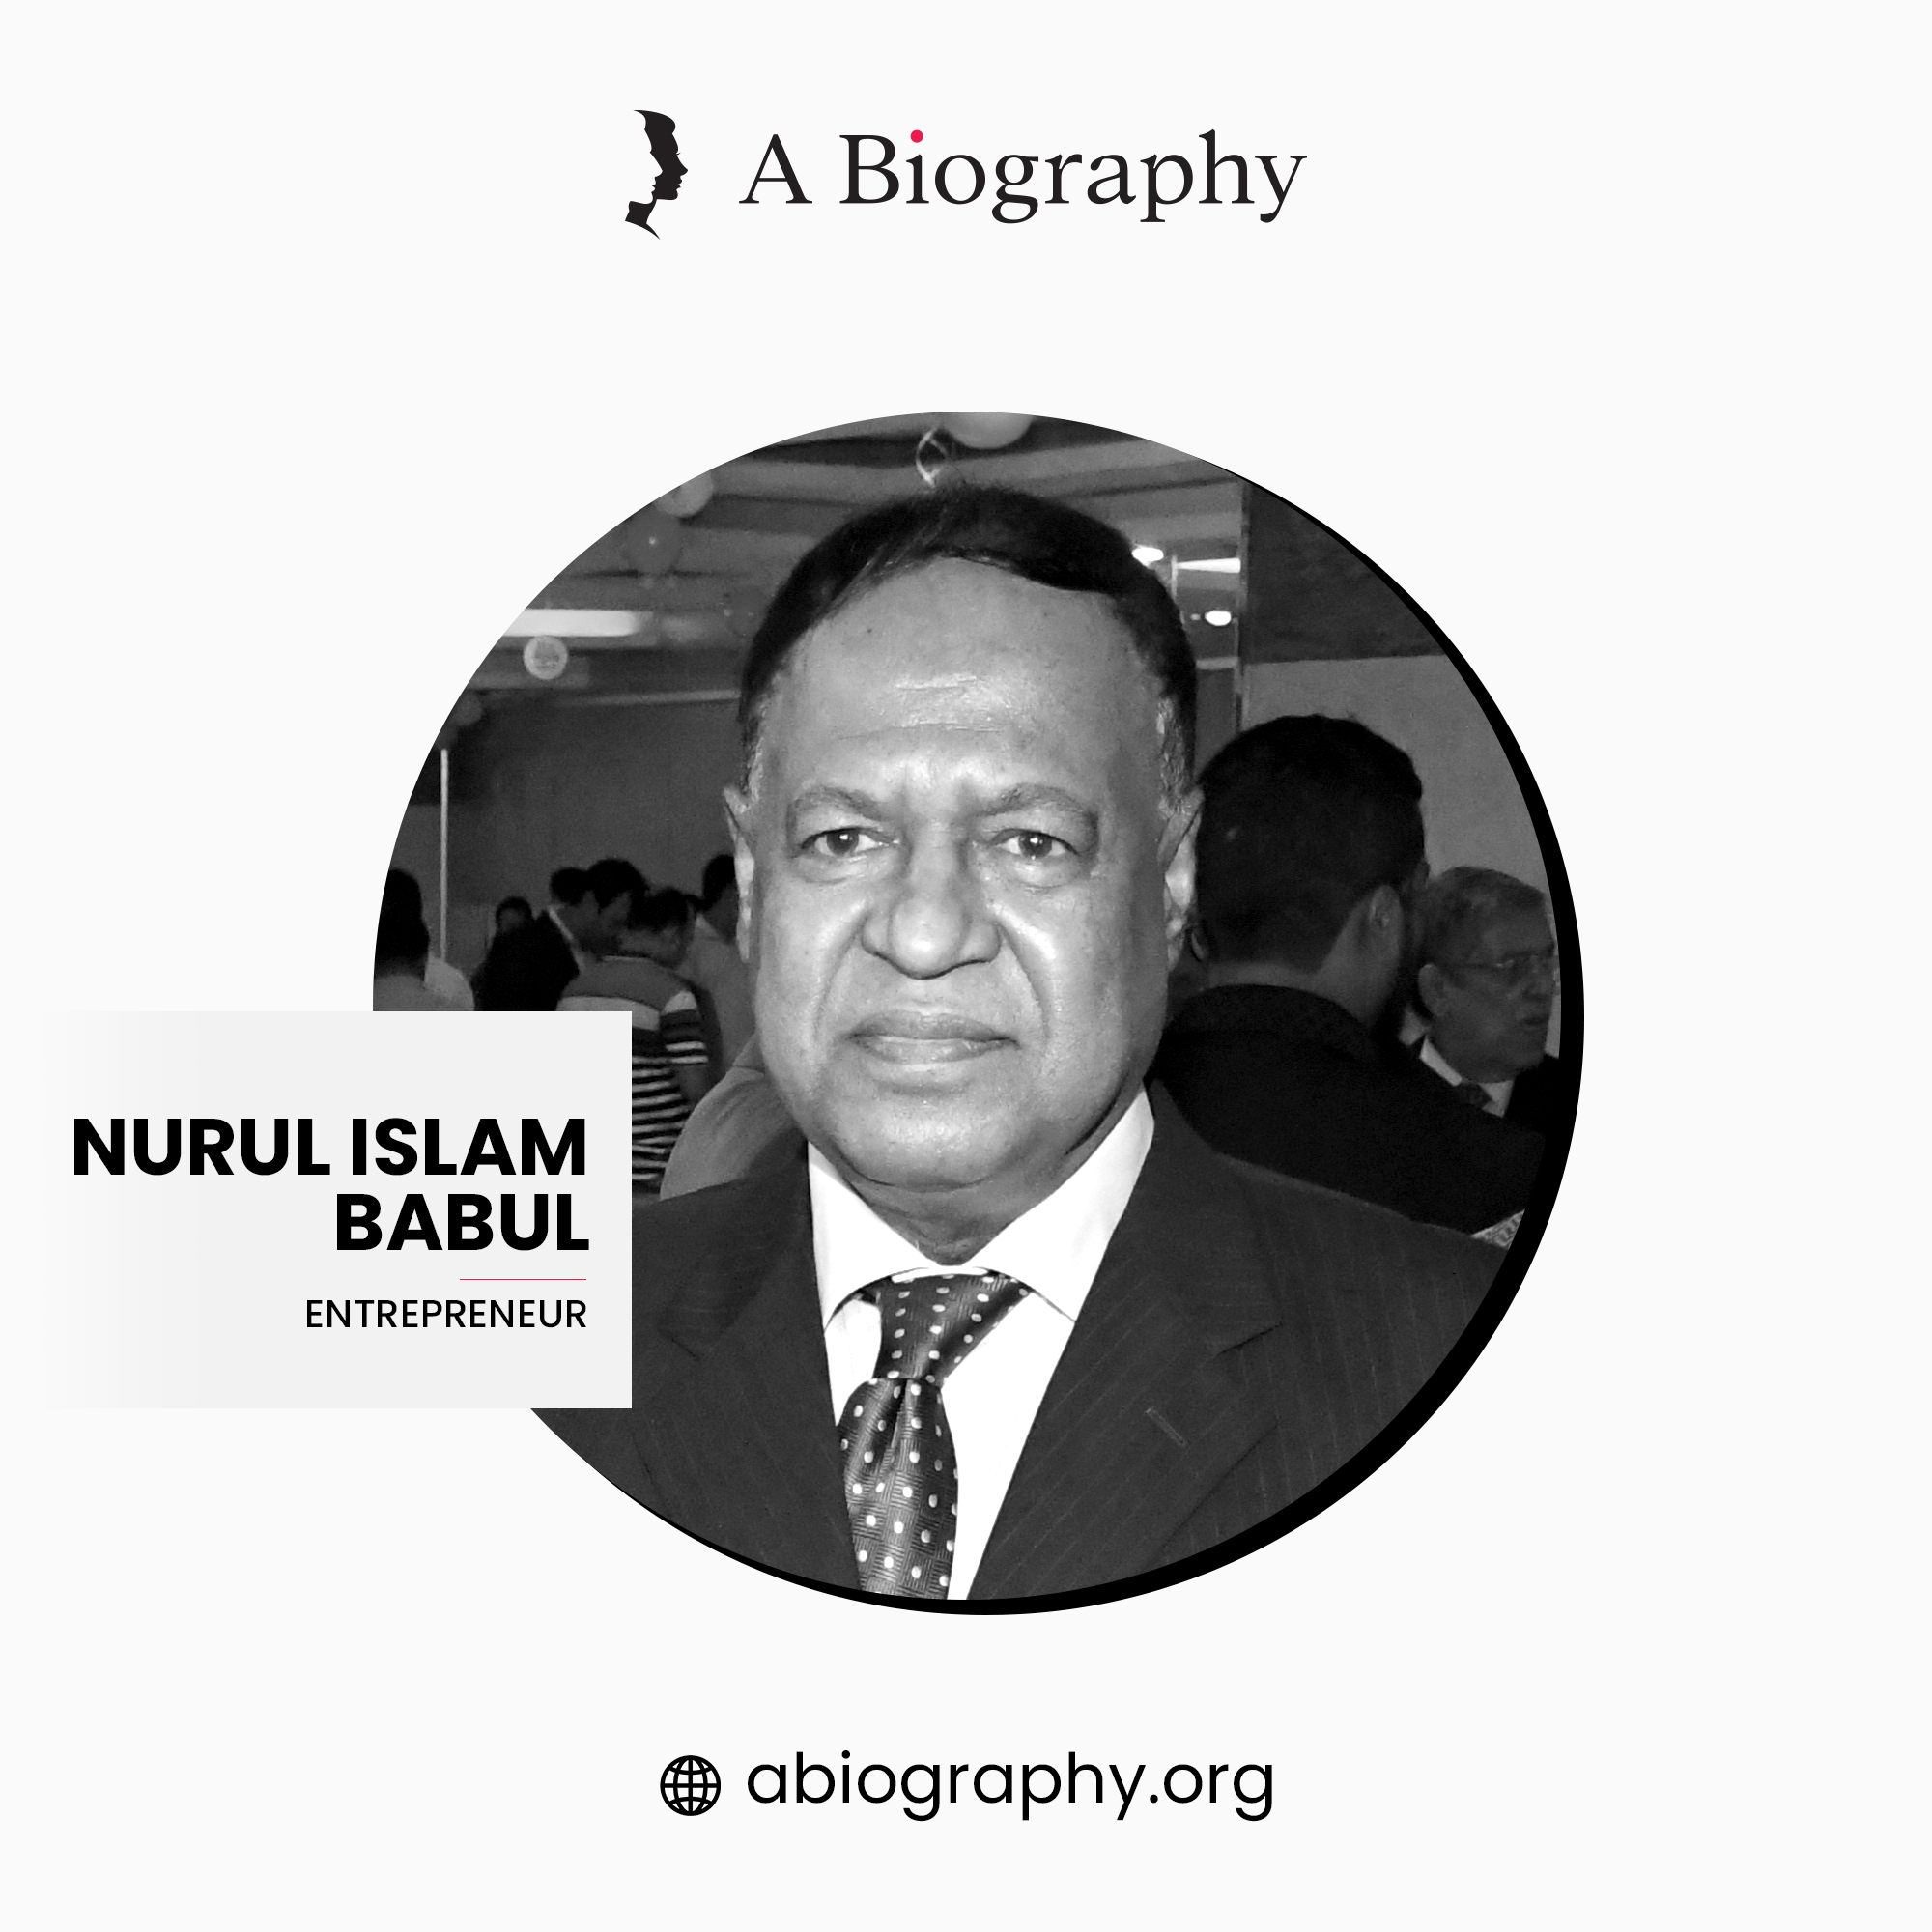 A BIOGRAPHY OF NURUL ISLAM BABUL